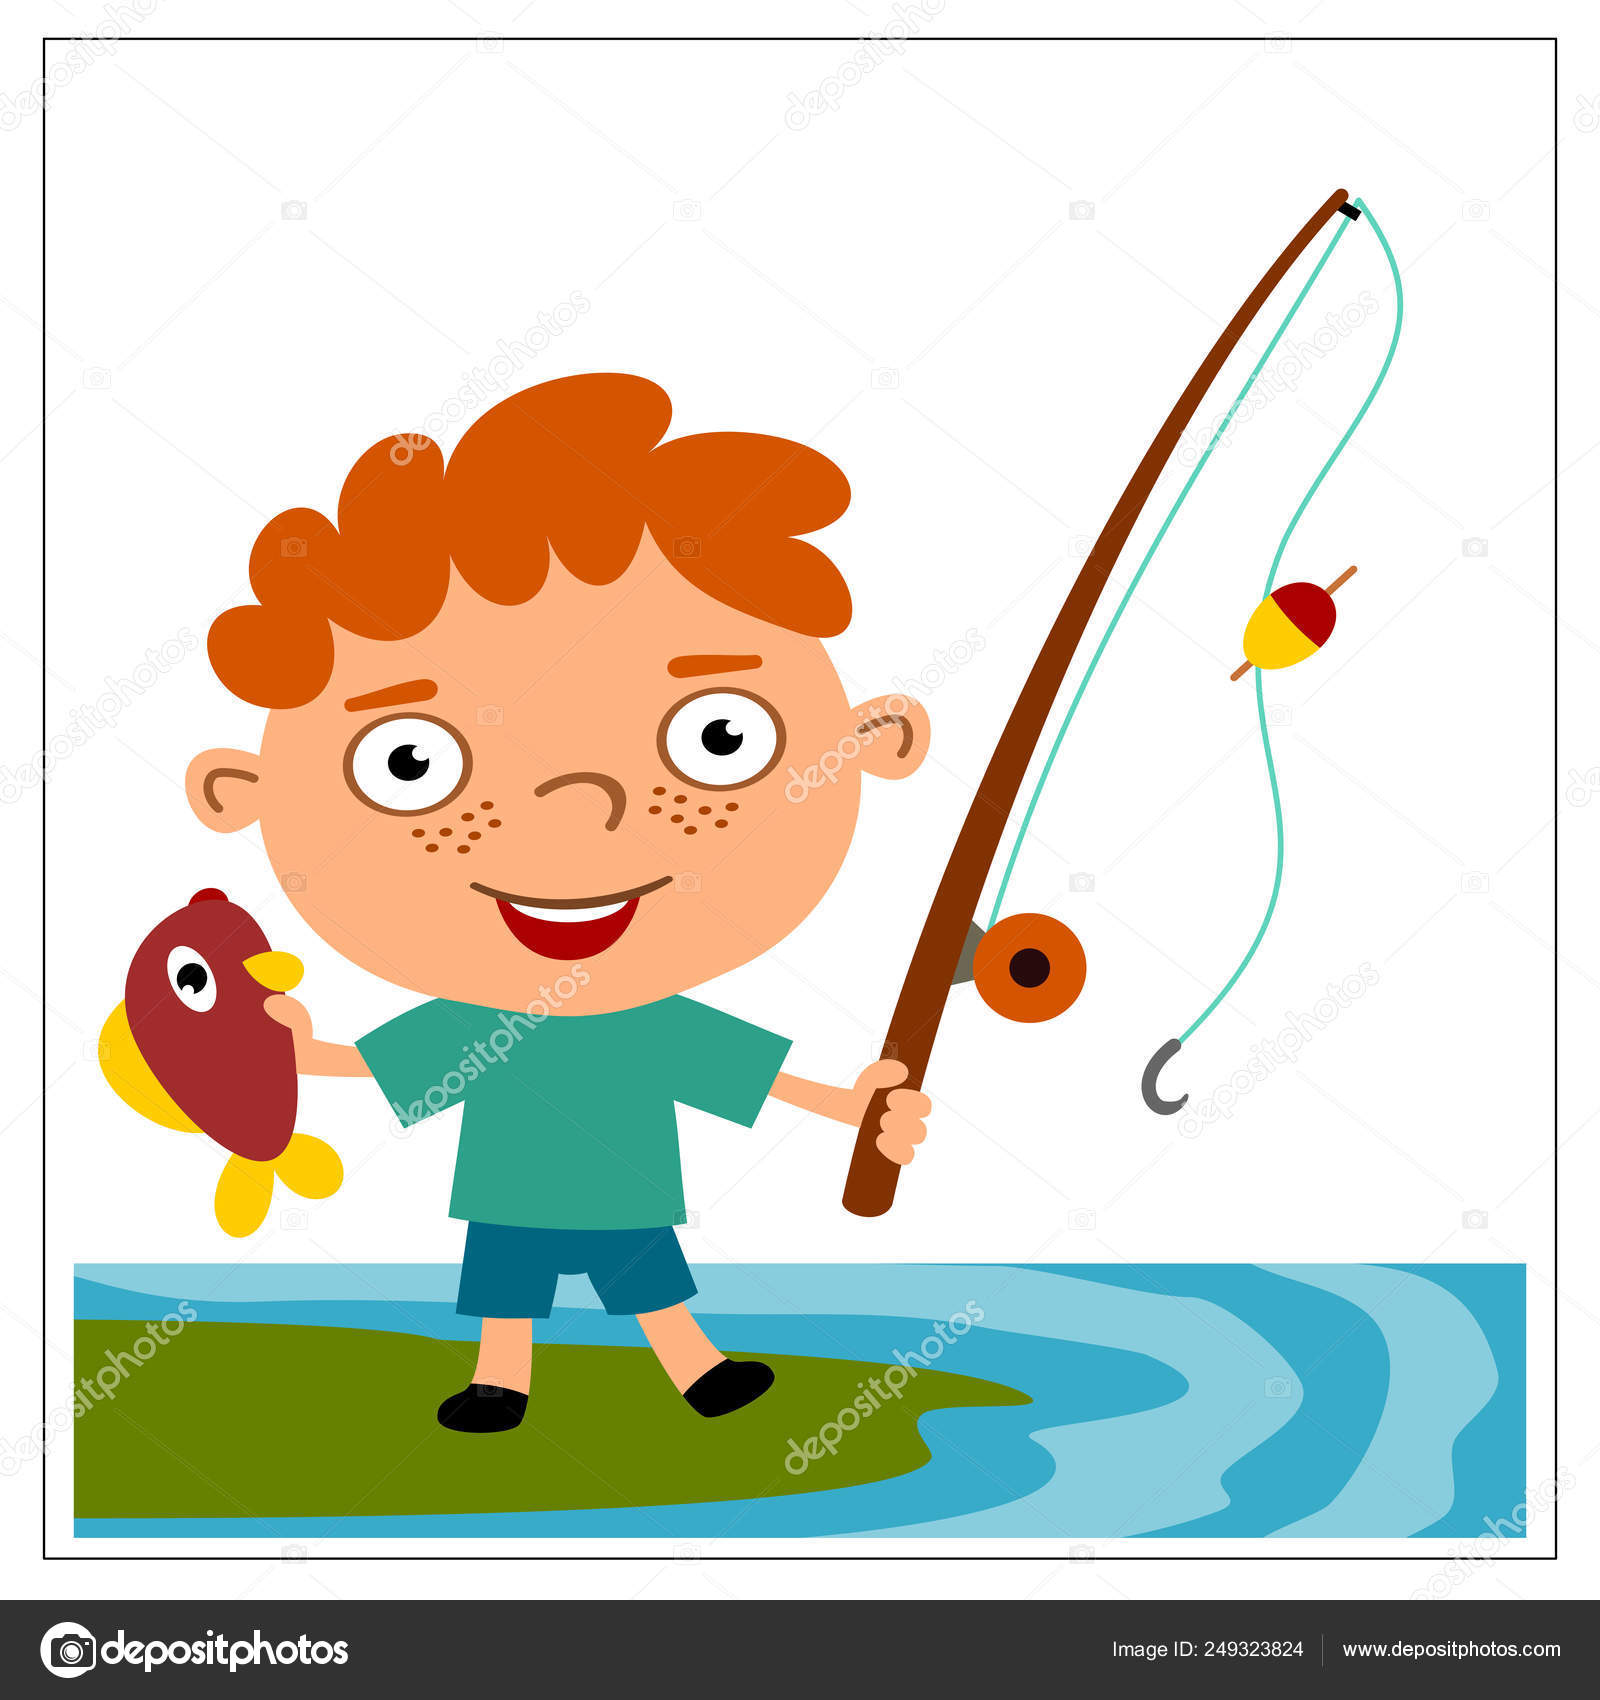 https://st4.depositphotos.com/4684081/24932/v/1600/depositphotos_249323824-stock-illustration-cute-cartoon-character-boy-fisherman.jpg